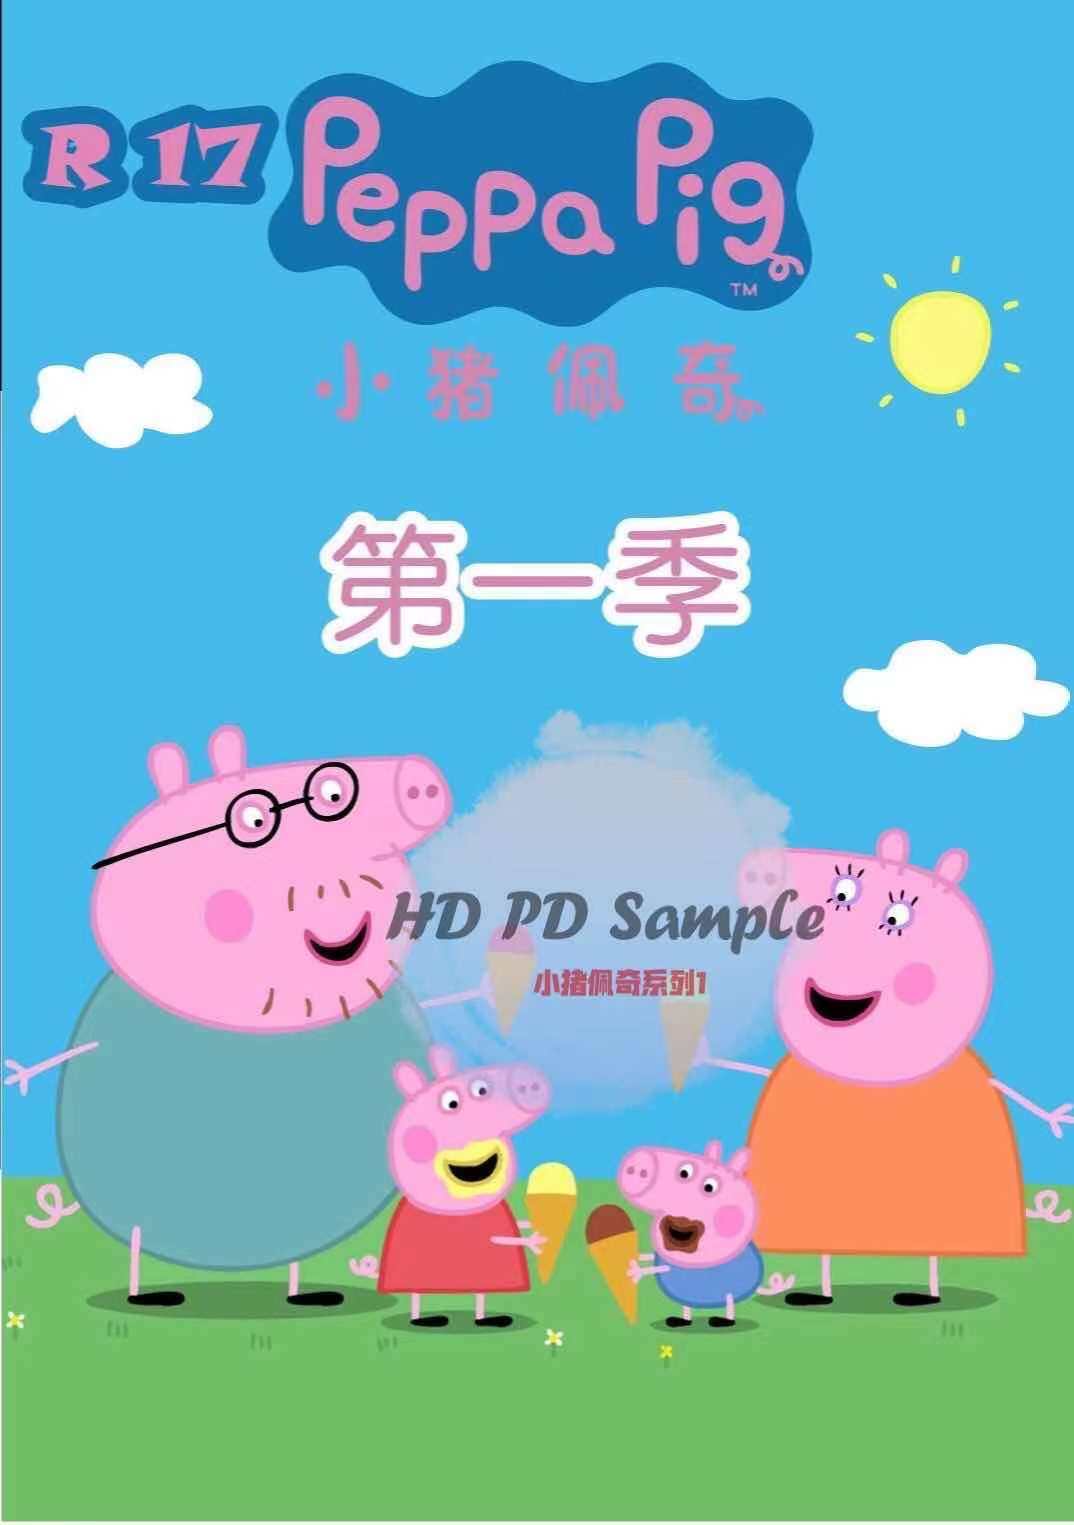 USB Pendrive Song MTV Cartoon Peppa Pig/小猪佩奇 R17 | Lazada